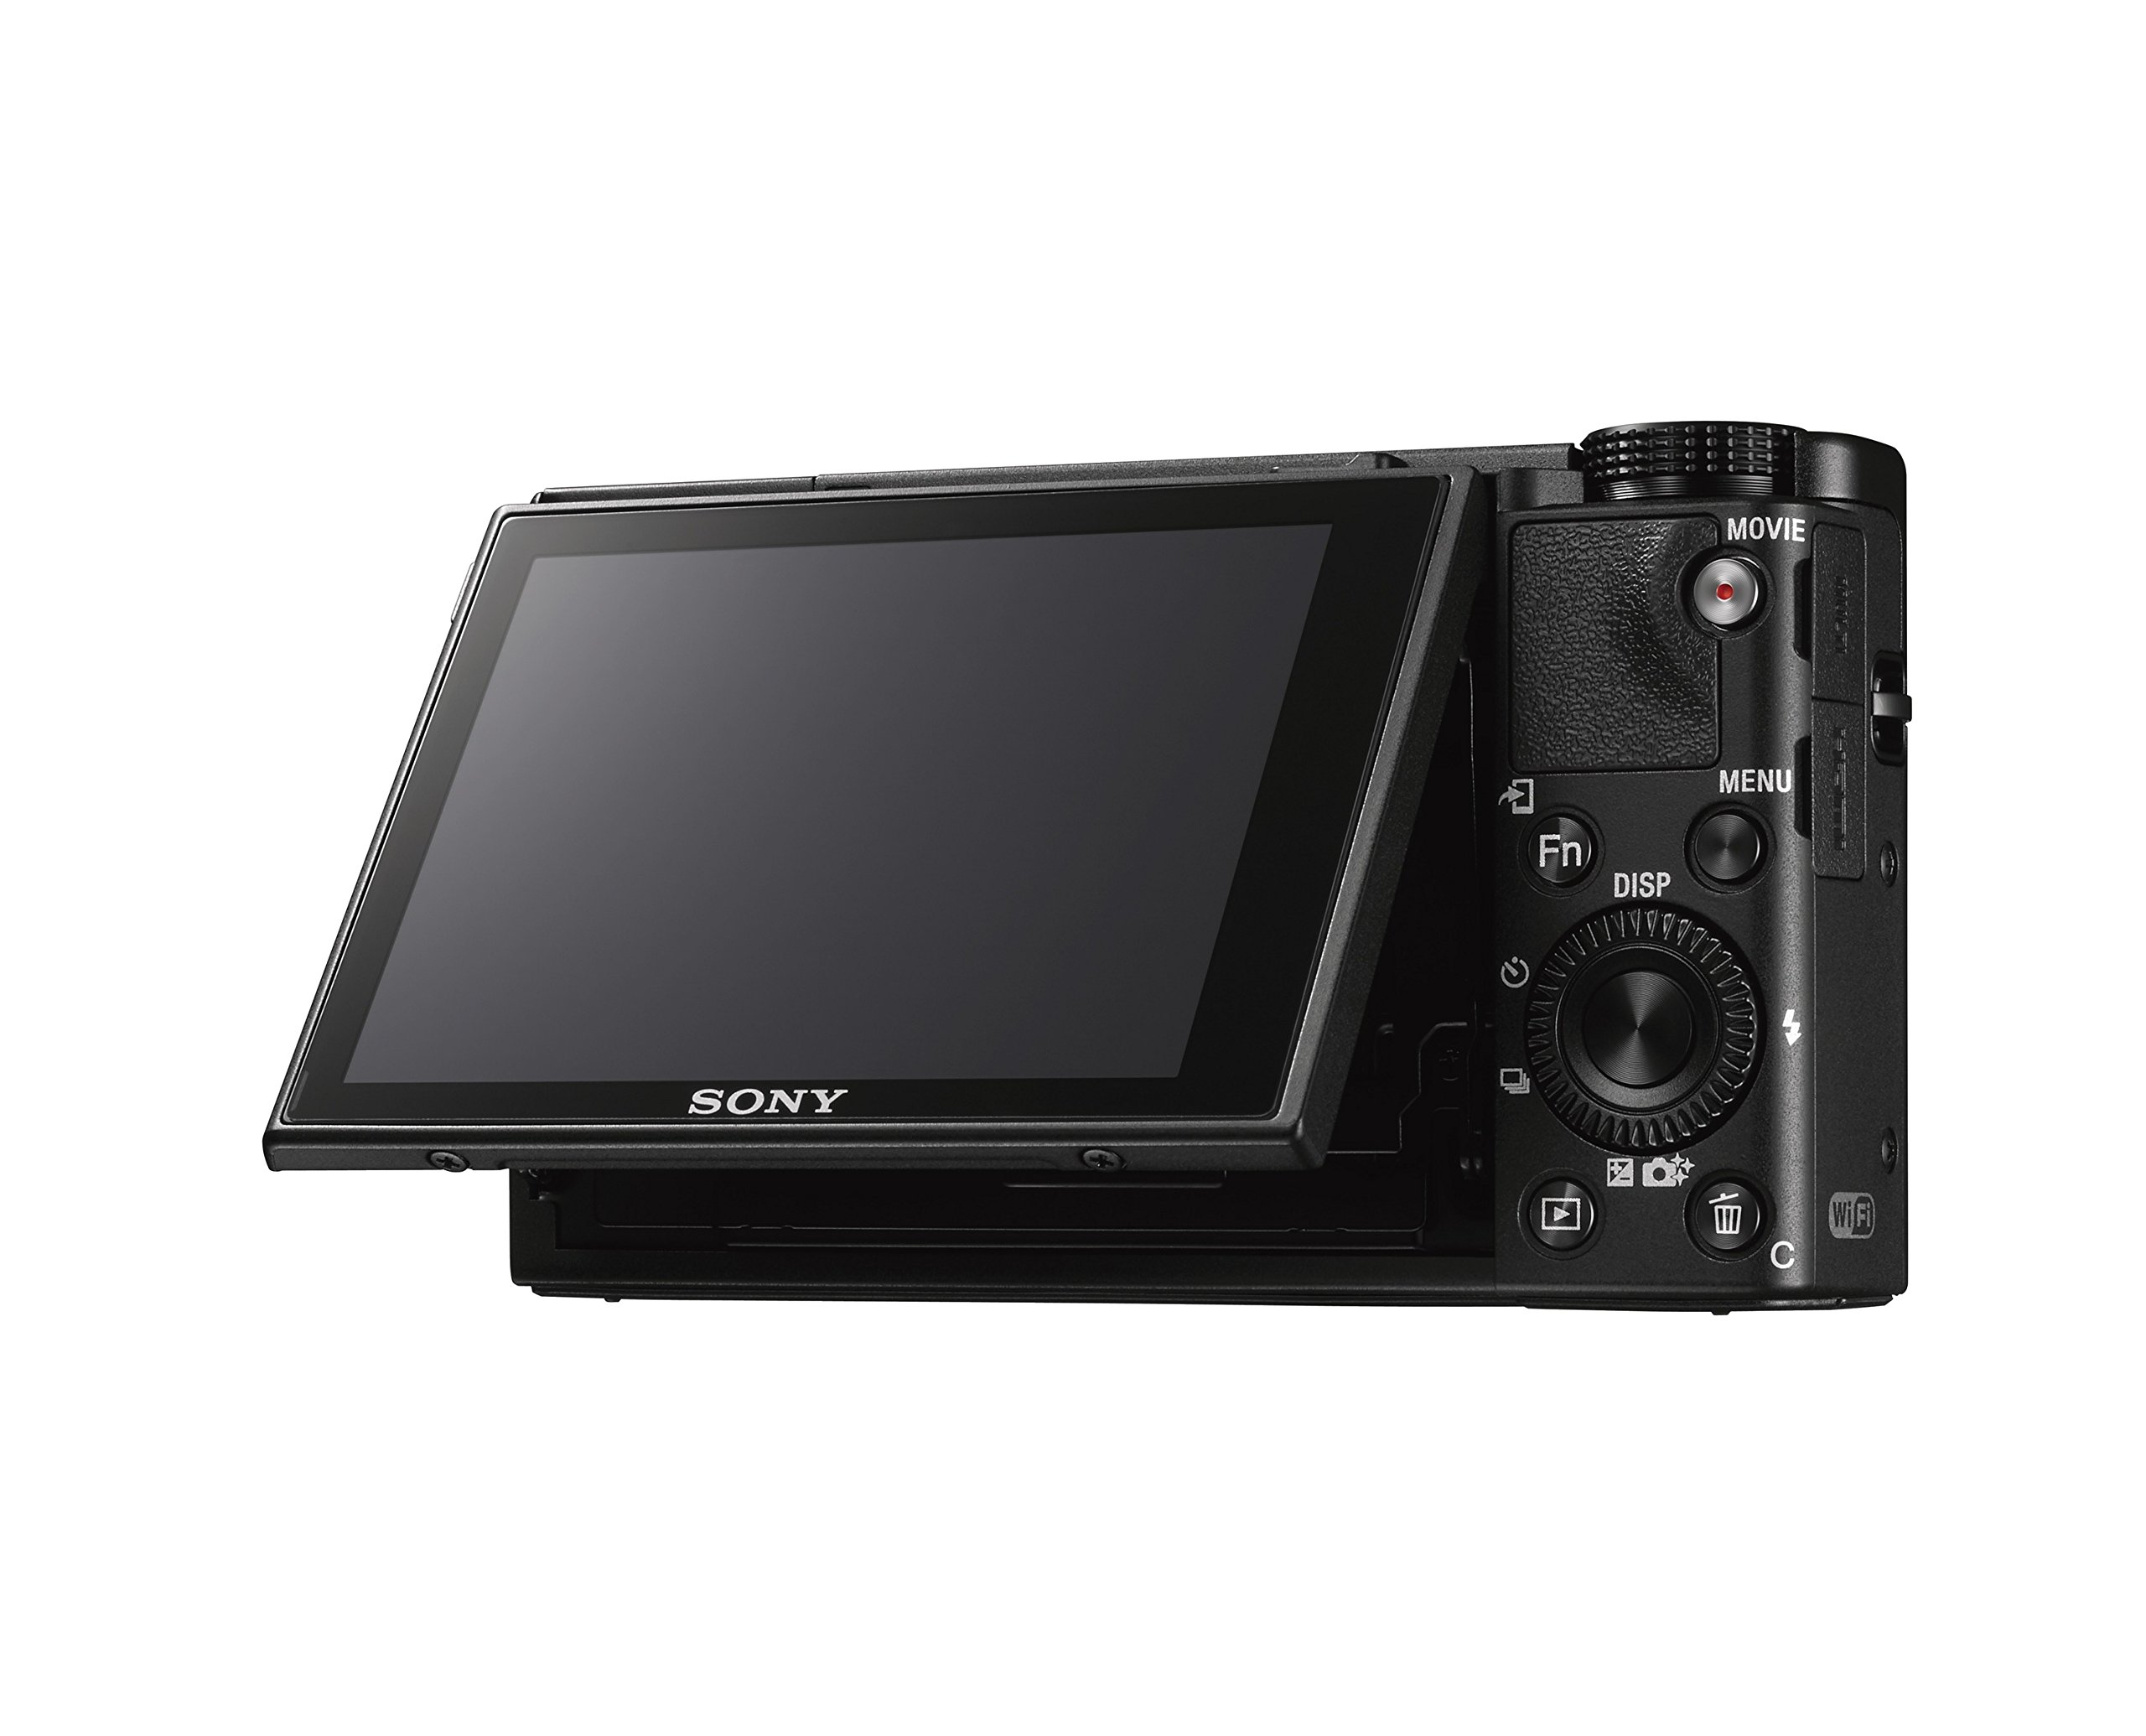 Sony Cyber-Shot DSC-RX100 V 20.1 MP Digital Still Camera with 3